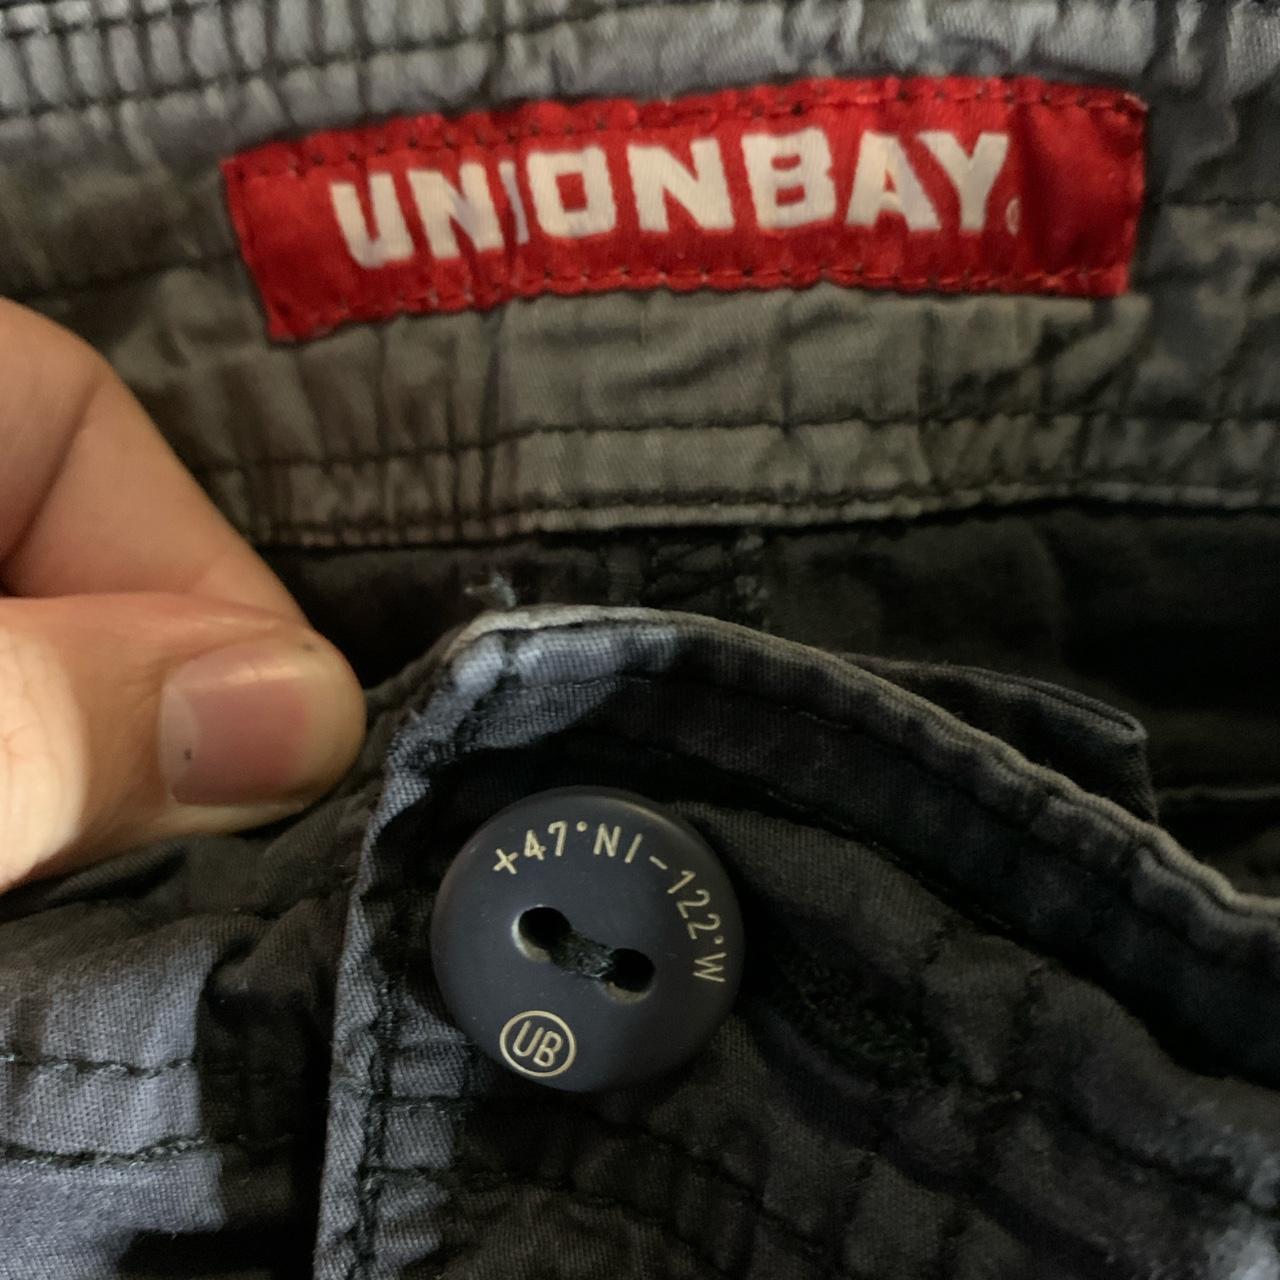 Product Image 4 - Union bay dark grey cargo